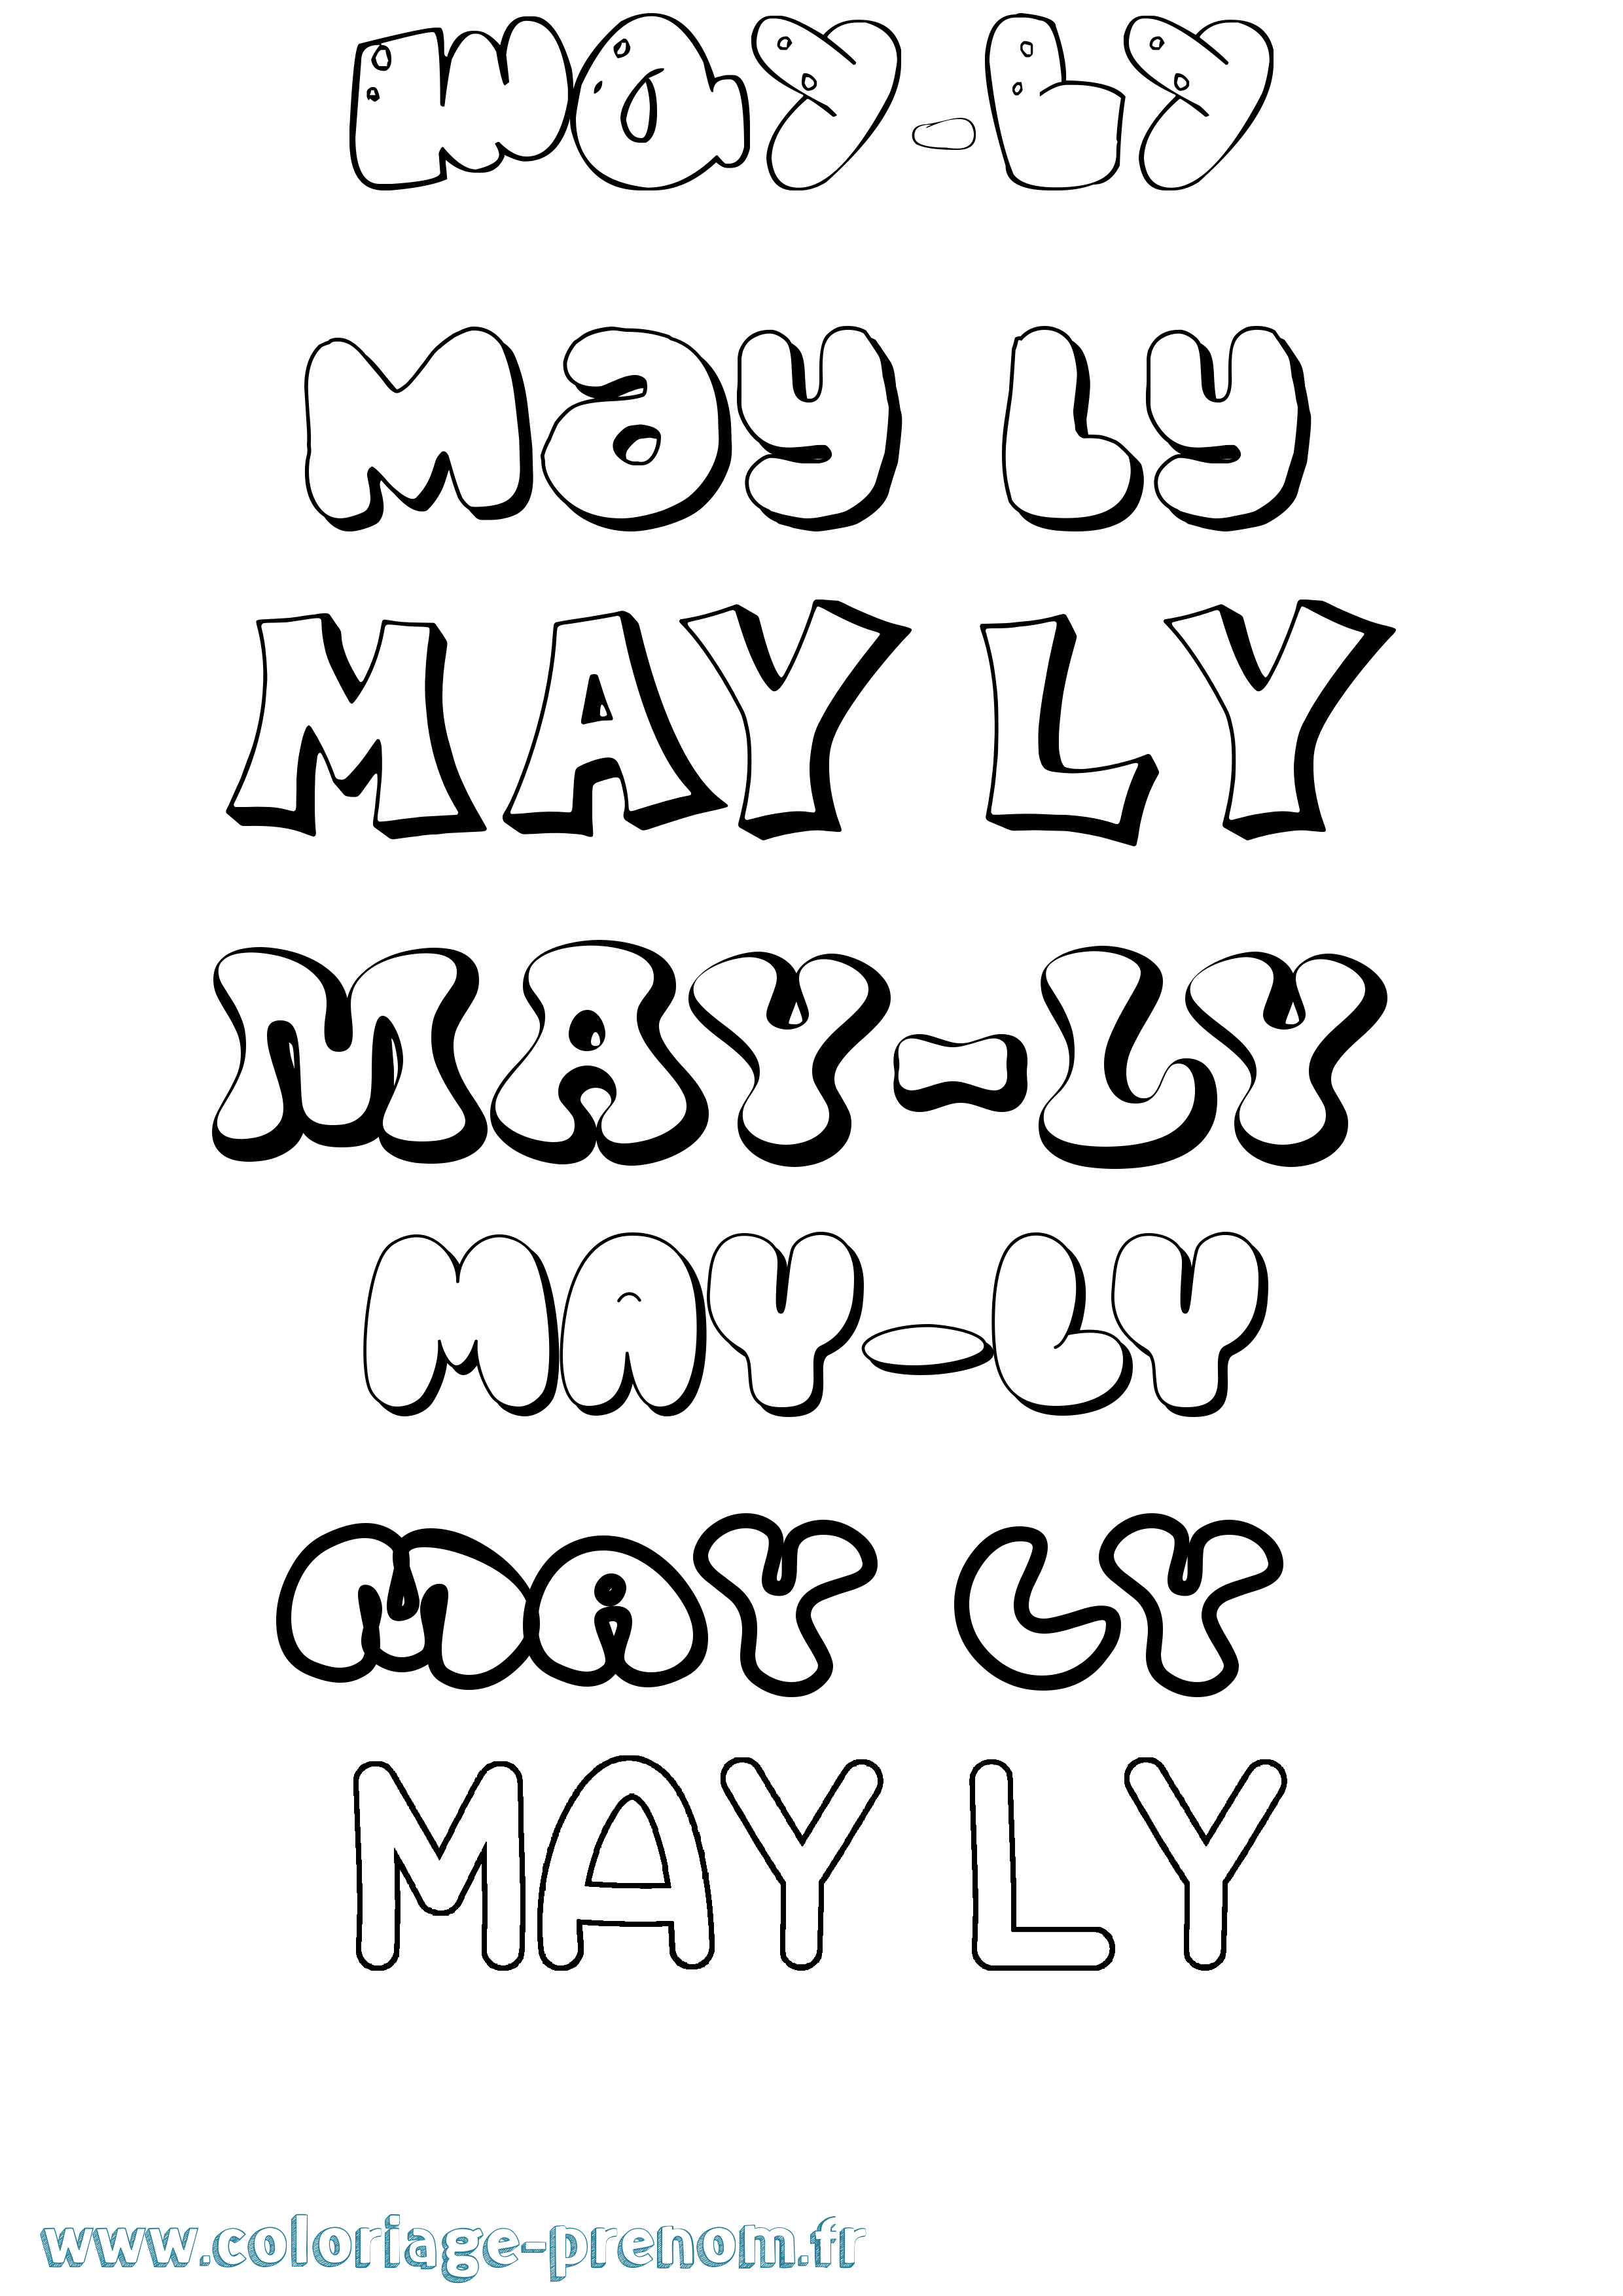 Coloriage prénom May-Ly Bubble